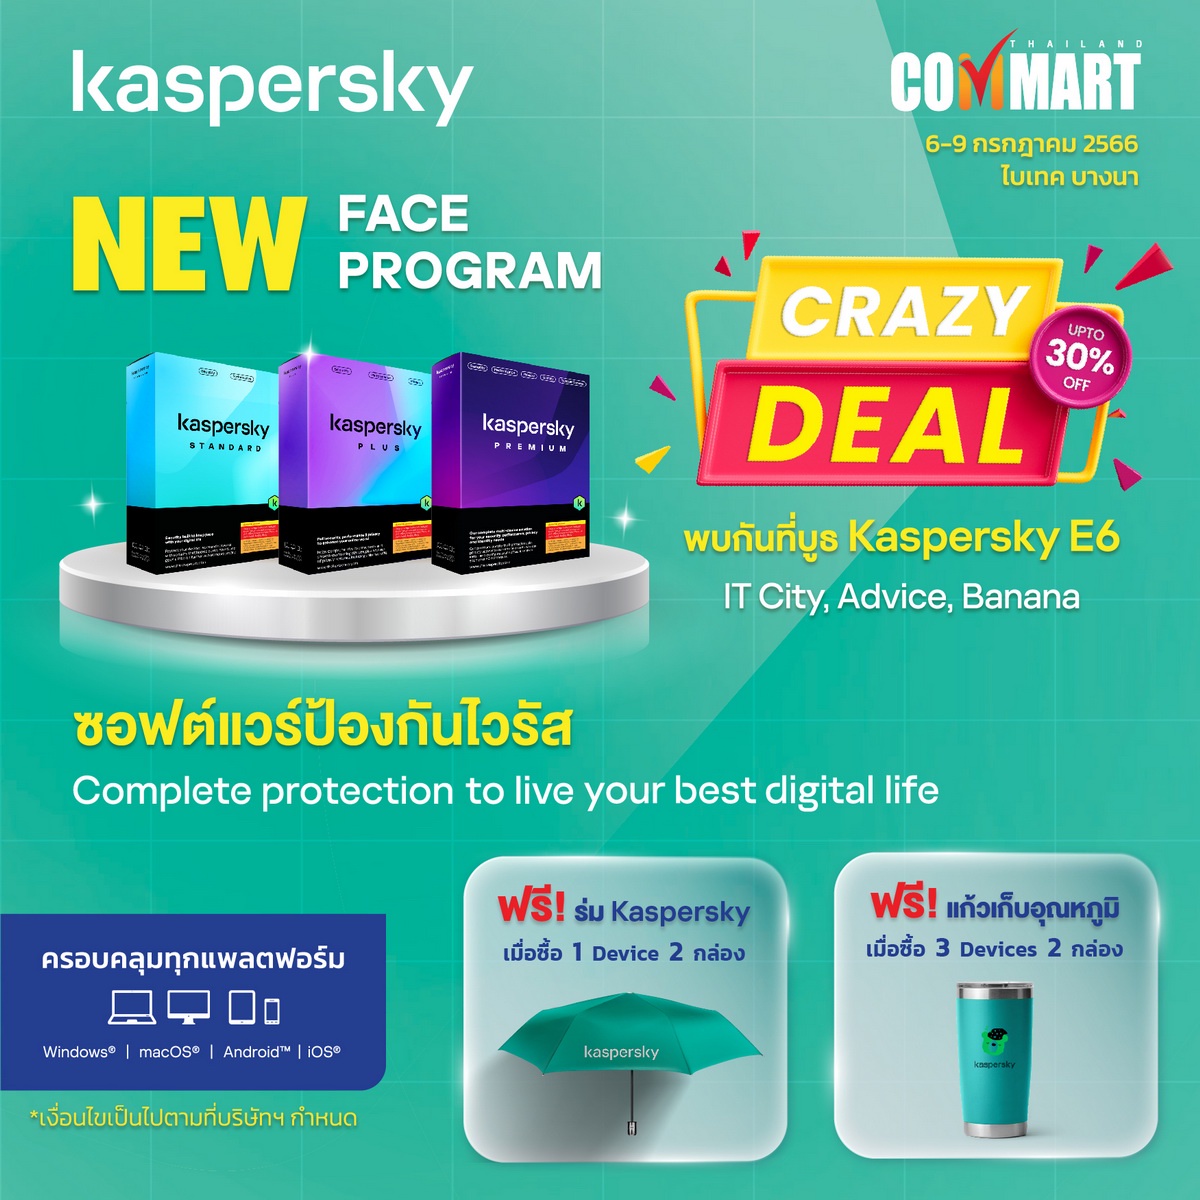 Kaspersky ลดจัดเต็มงาน Commart Crazy Deal